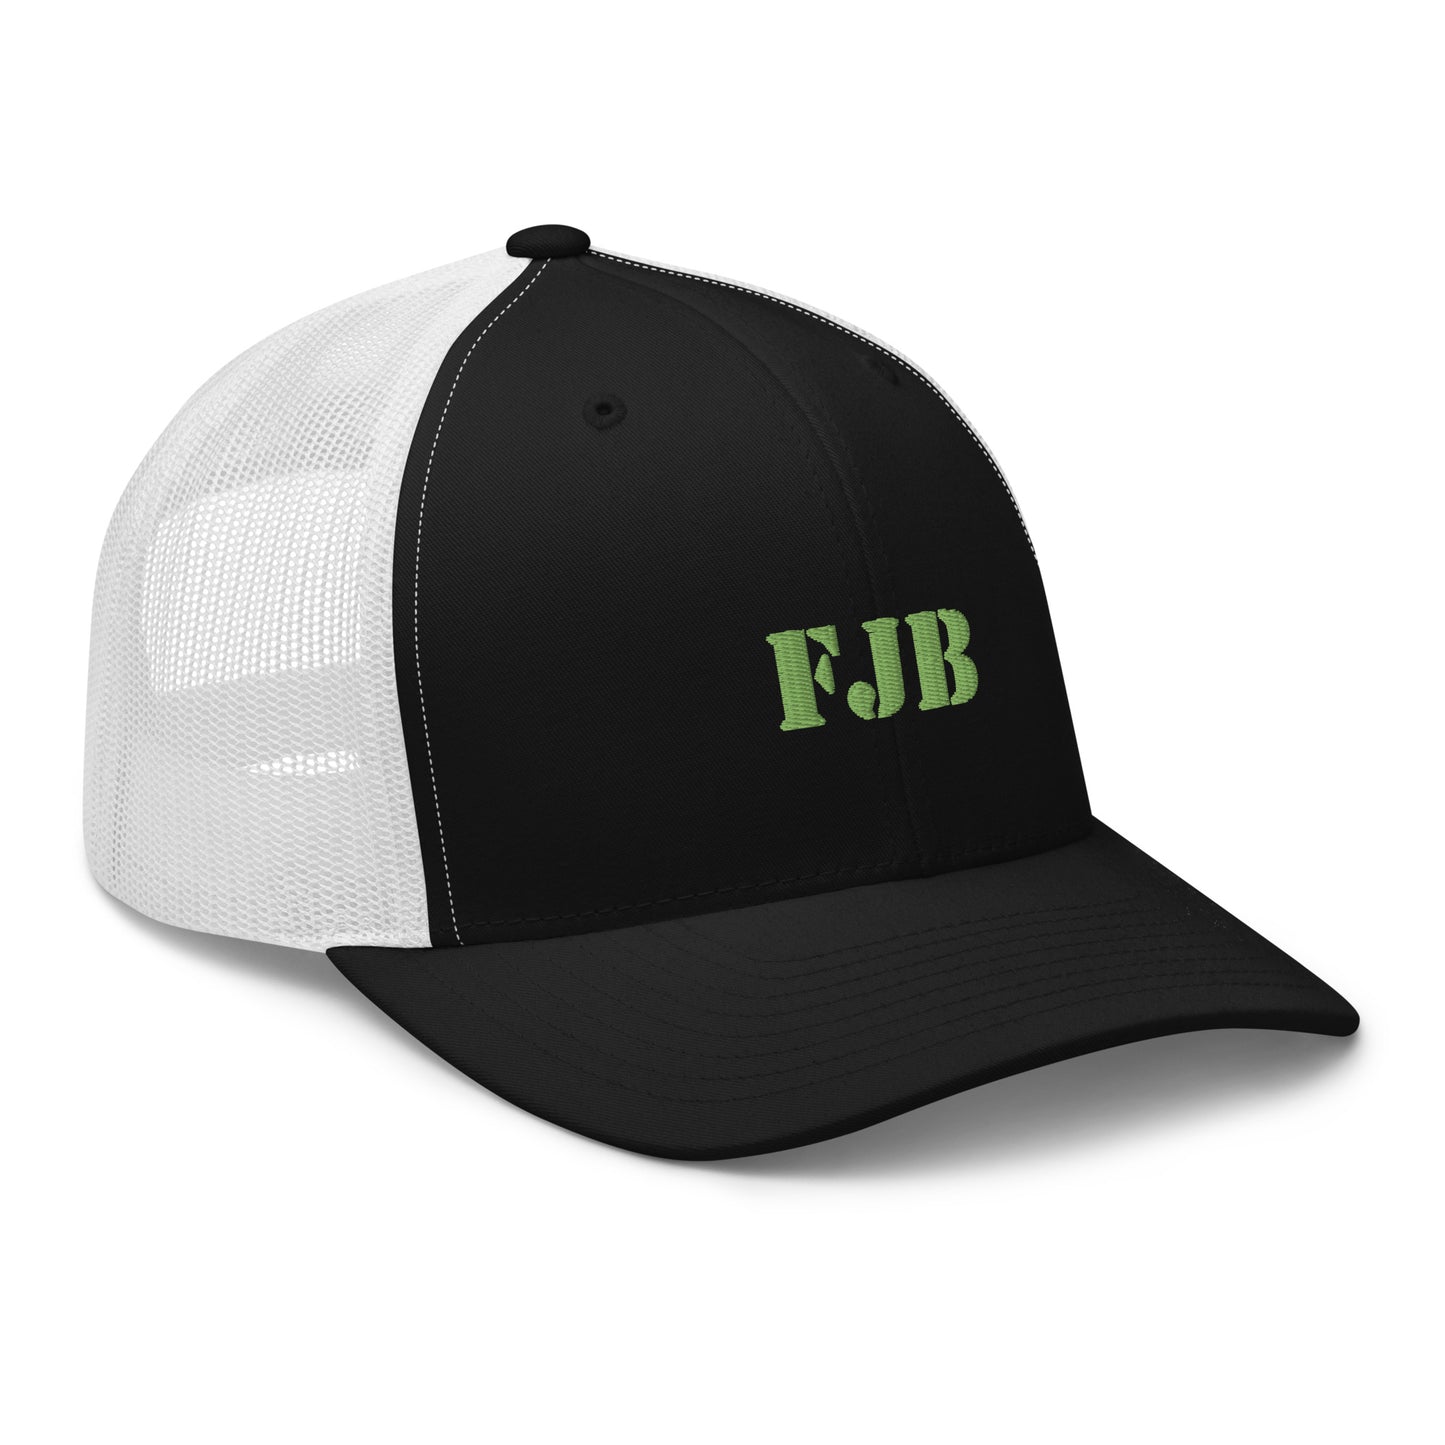 FJB Trucker Cap